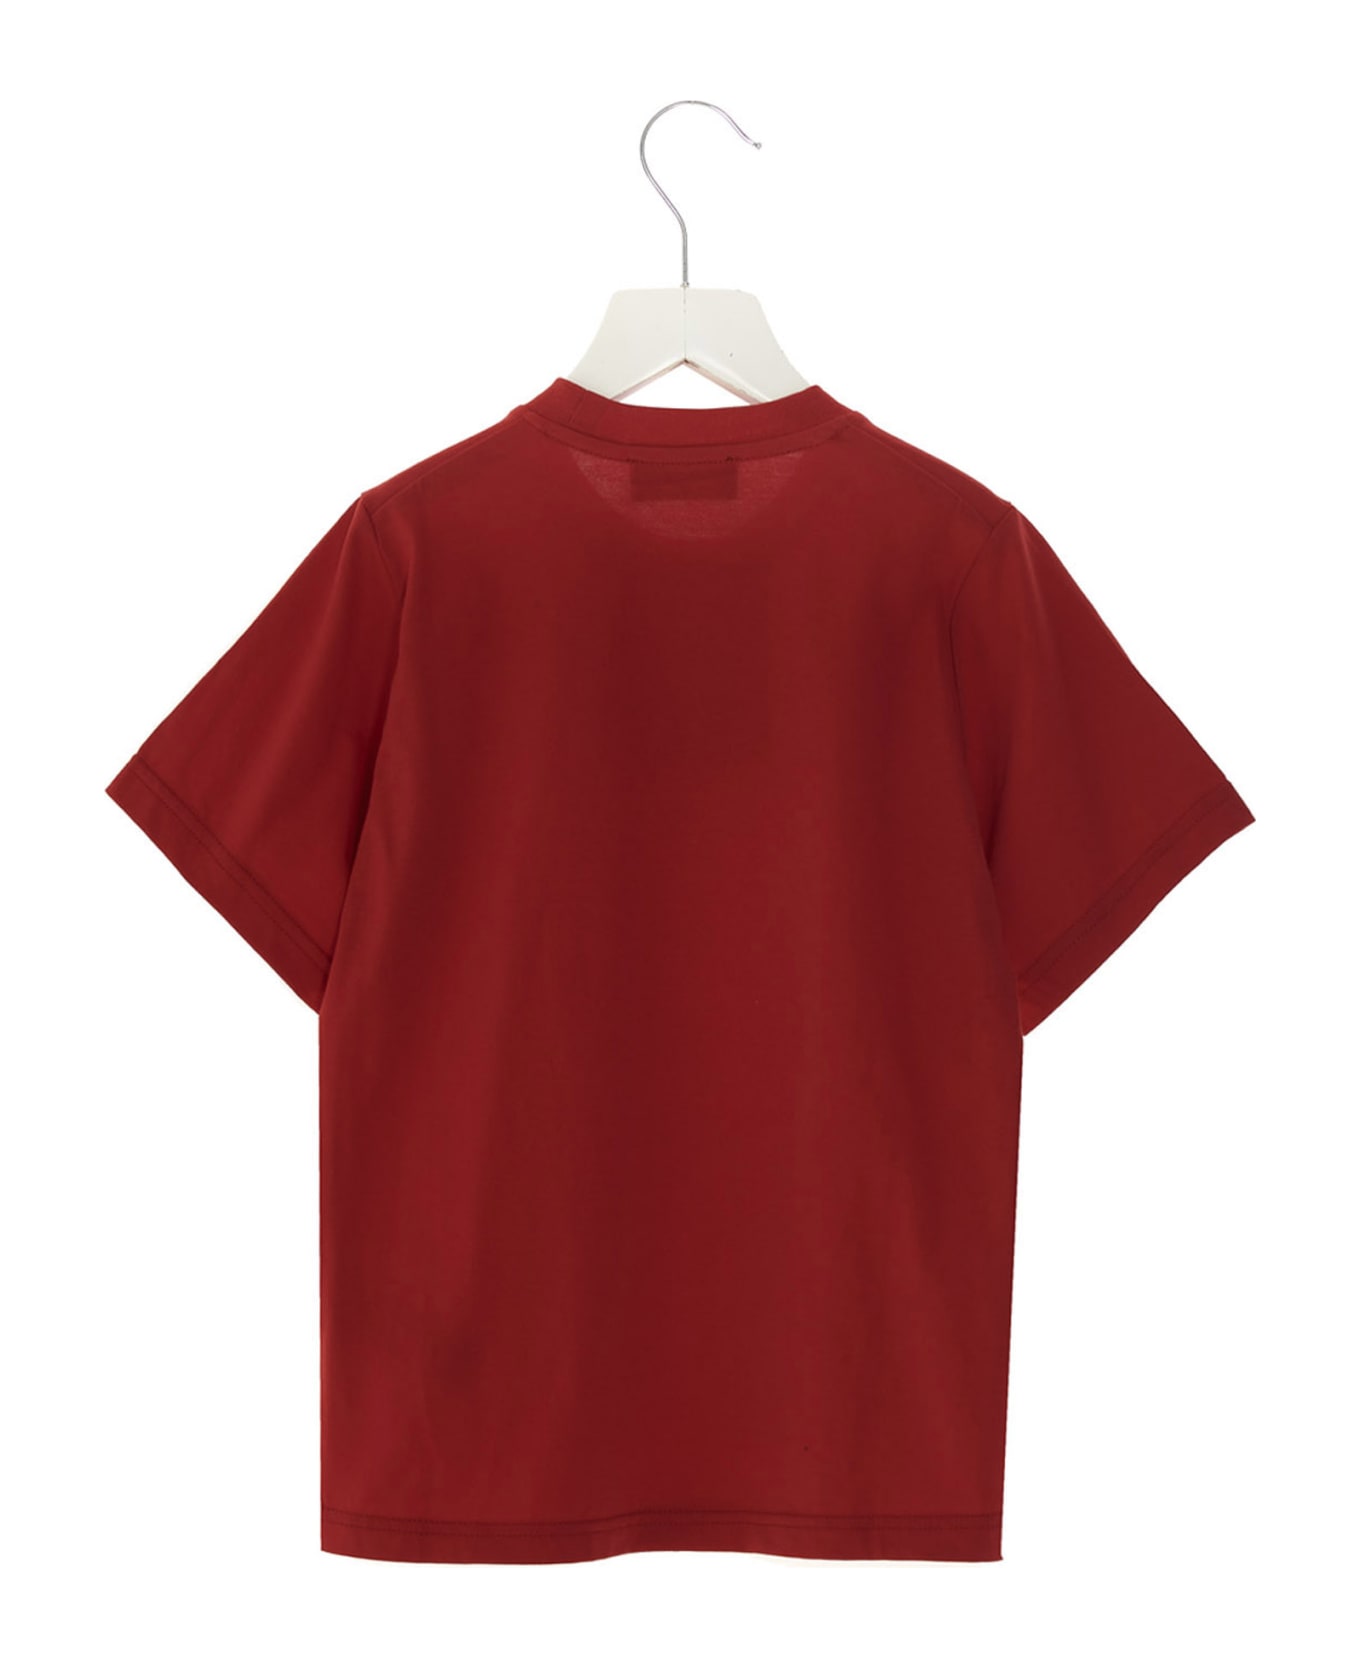 Dsquared2 Logo Print T-shirt - Red